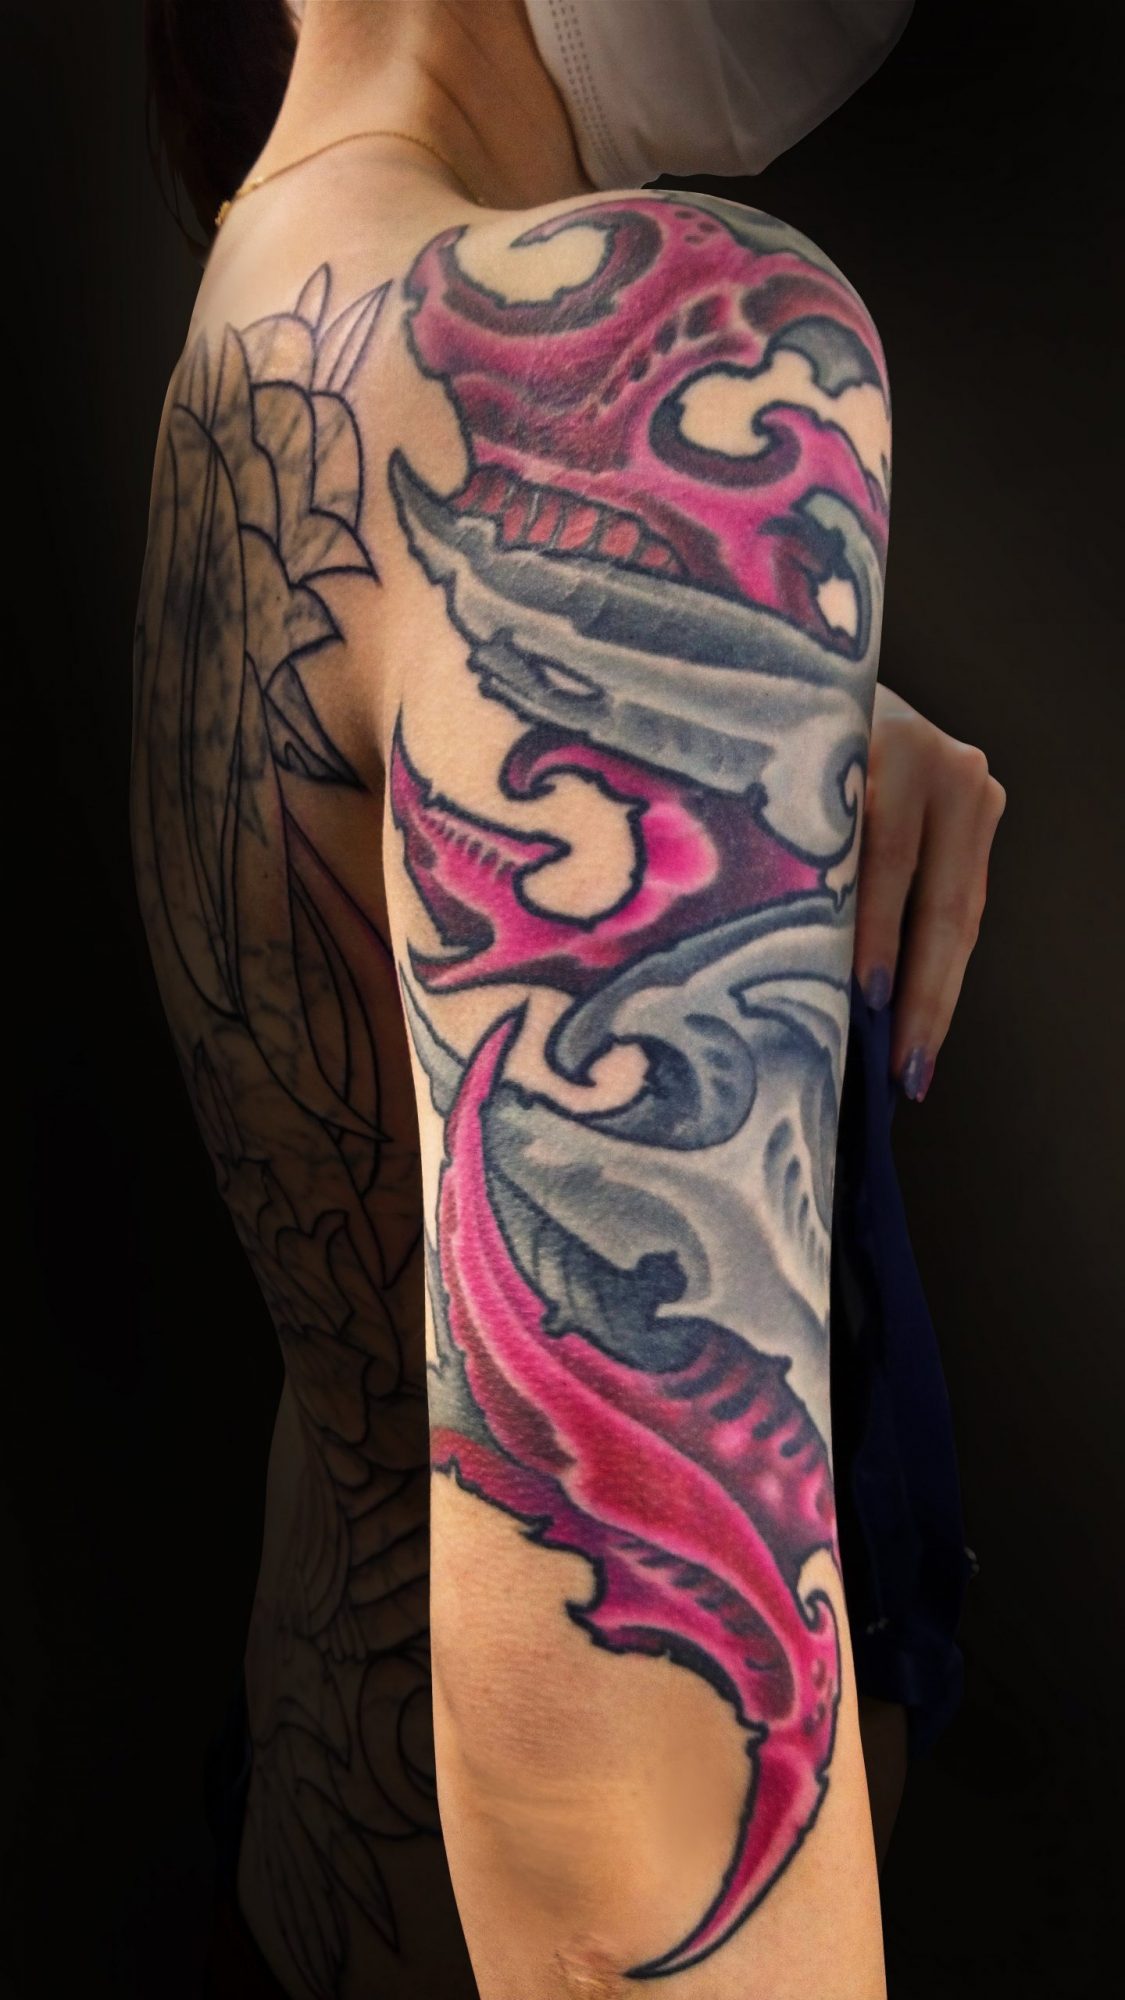 KINGRAT TATTOO 作品 | LAVA gallery | Tattoo artist: Yuji Anai | キングラット | ラバギャラリー | タトゥーアート | 福岡県北九州市 | KIMG8889